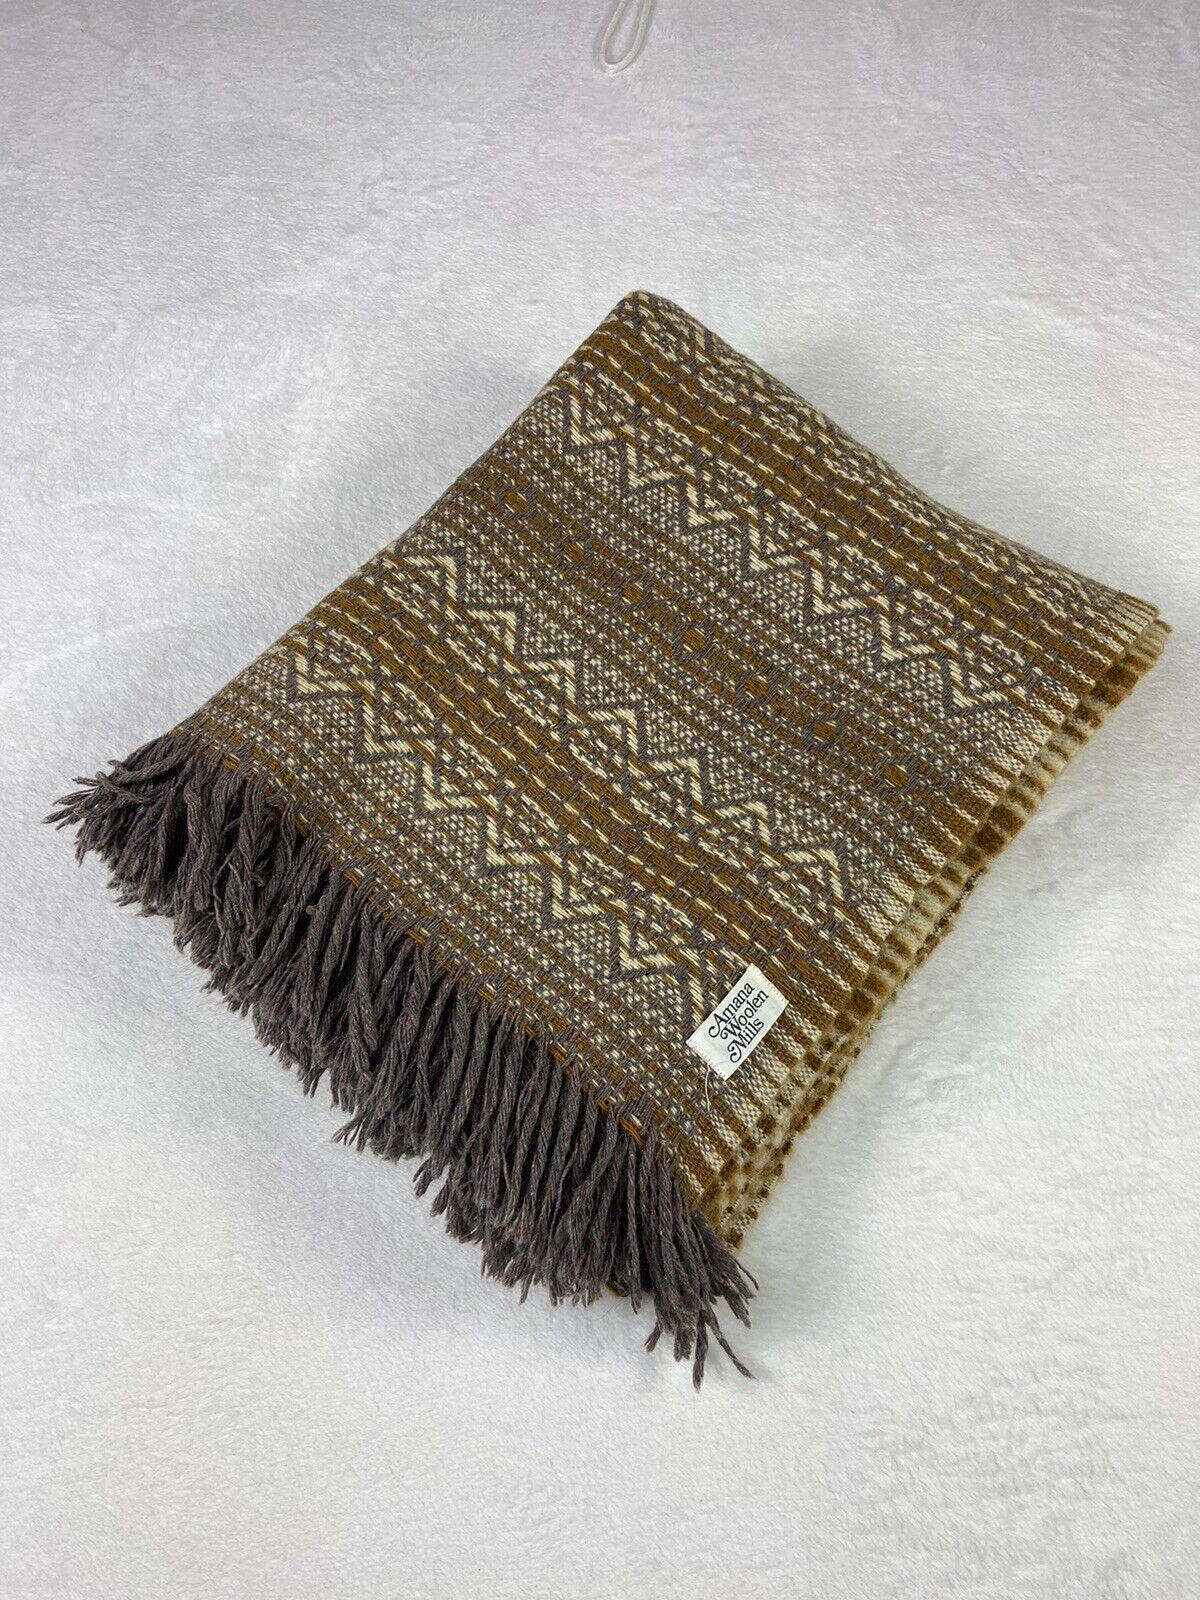 Vintage Amanda Woolen Mills 100% Wool Fringed Blanket Geometric Chevron 56”x 70”